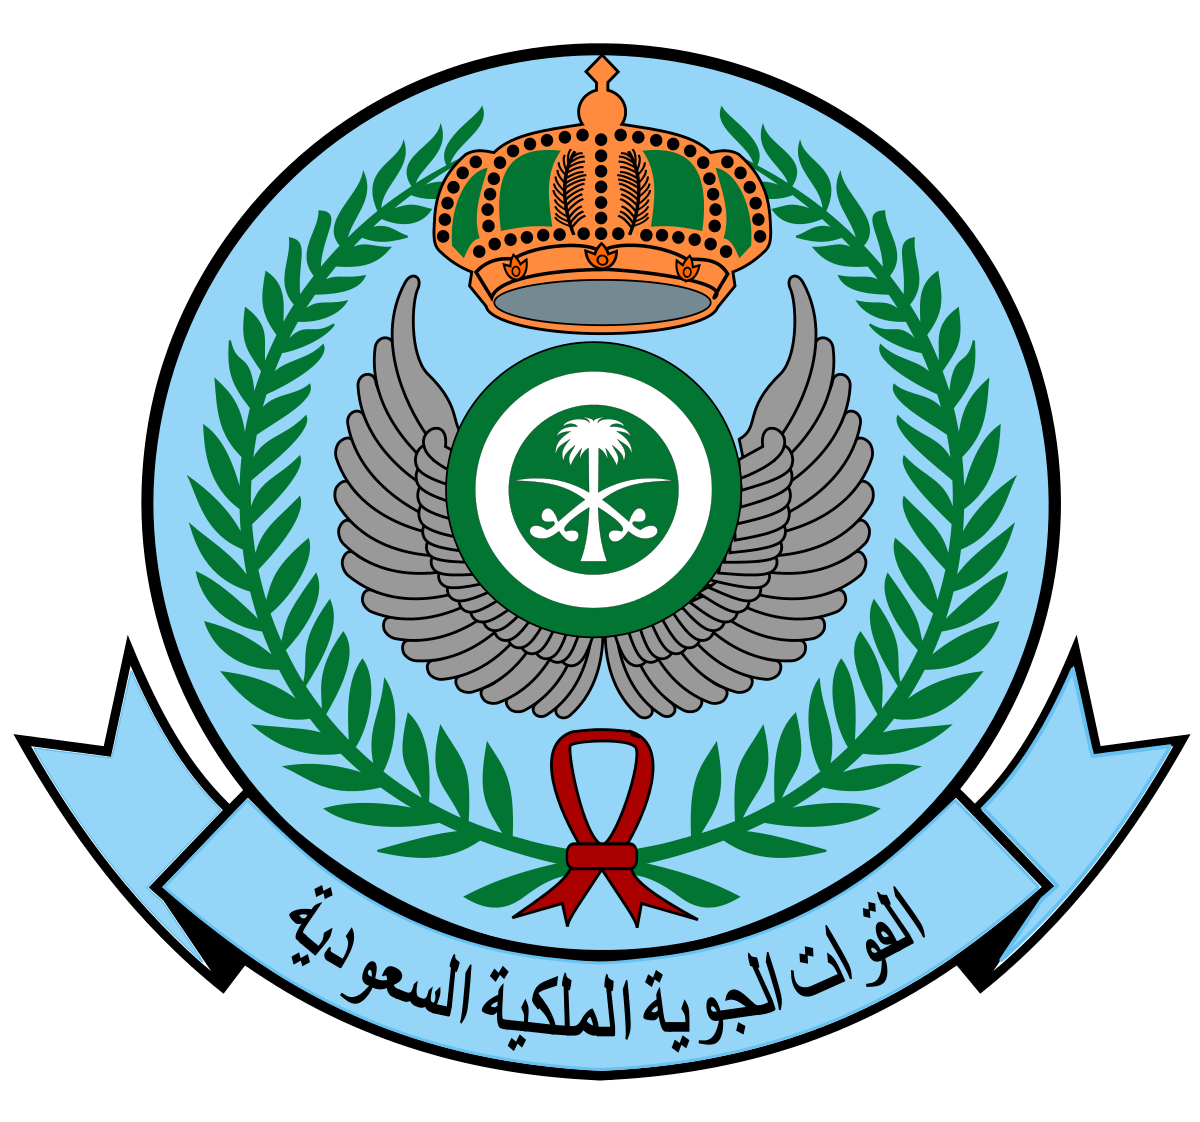 Royal Saudi Air Force - Wikipedia